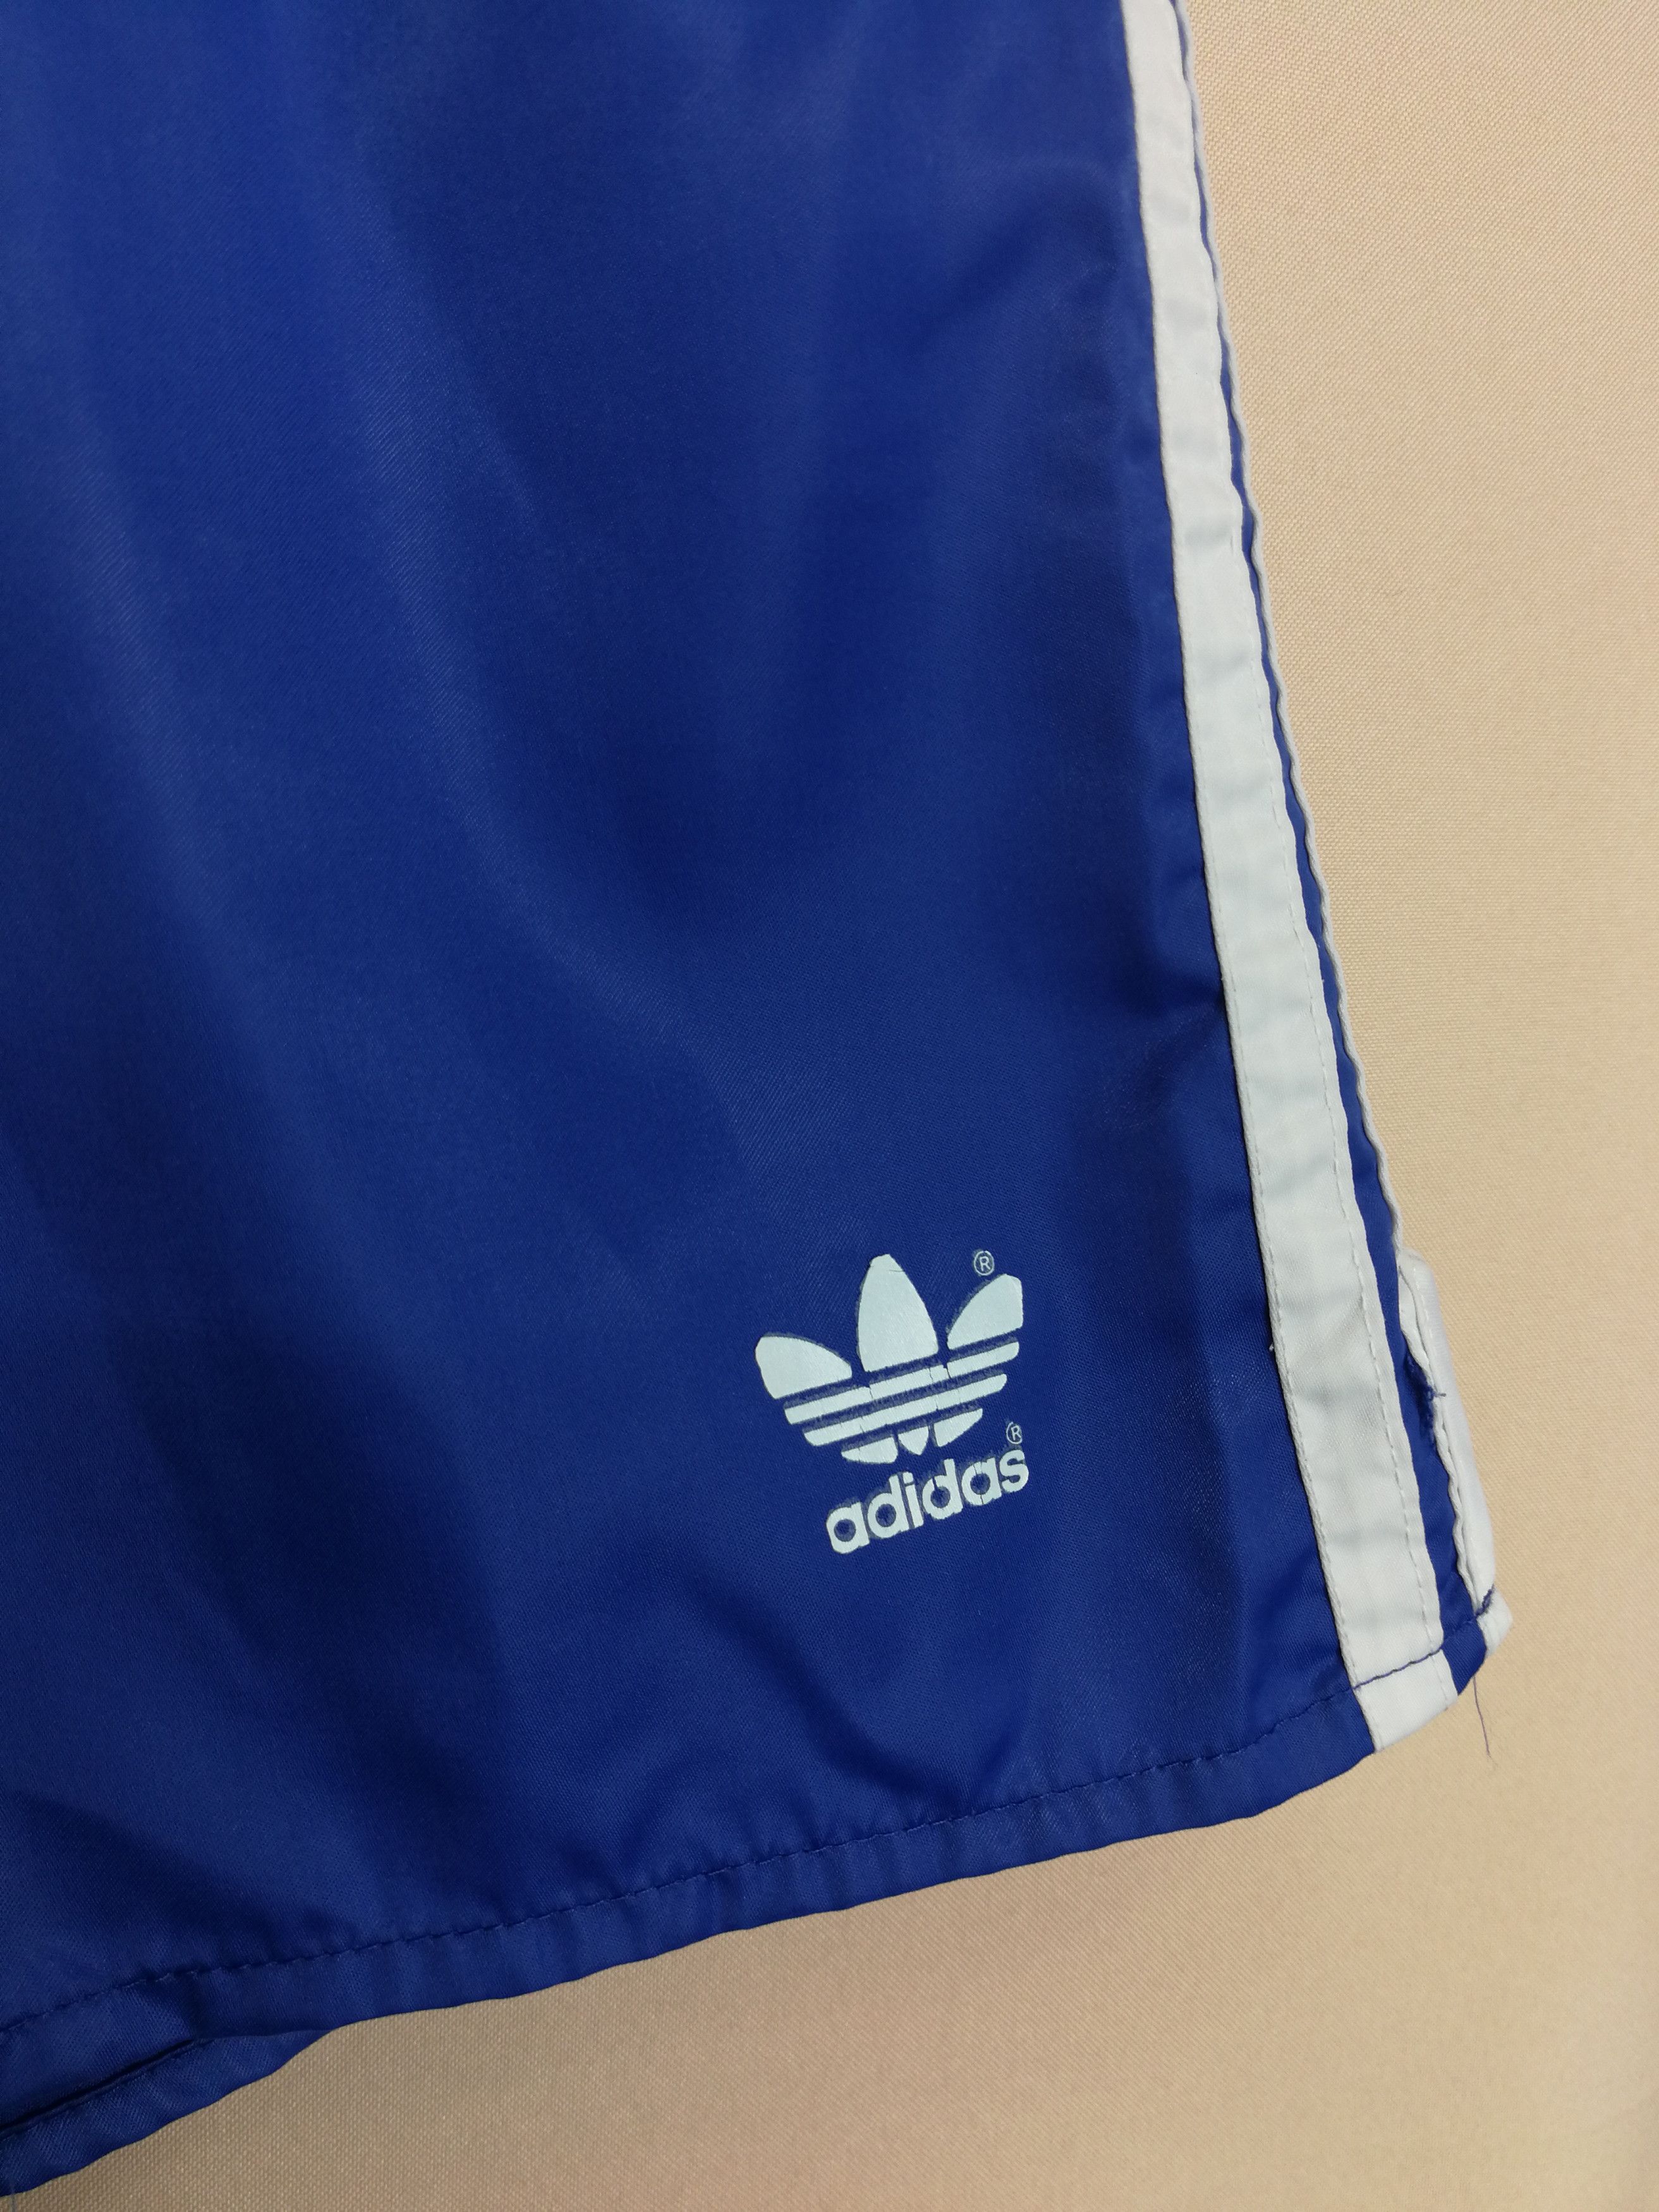 Adidas Vintage 80's Adidas Shorts Blue Yugoslavia Size US 32 / EU 48 - 4 Thumbnail